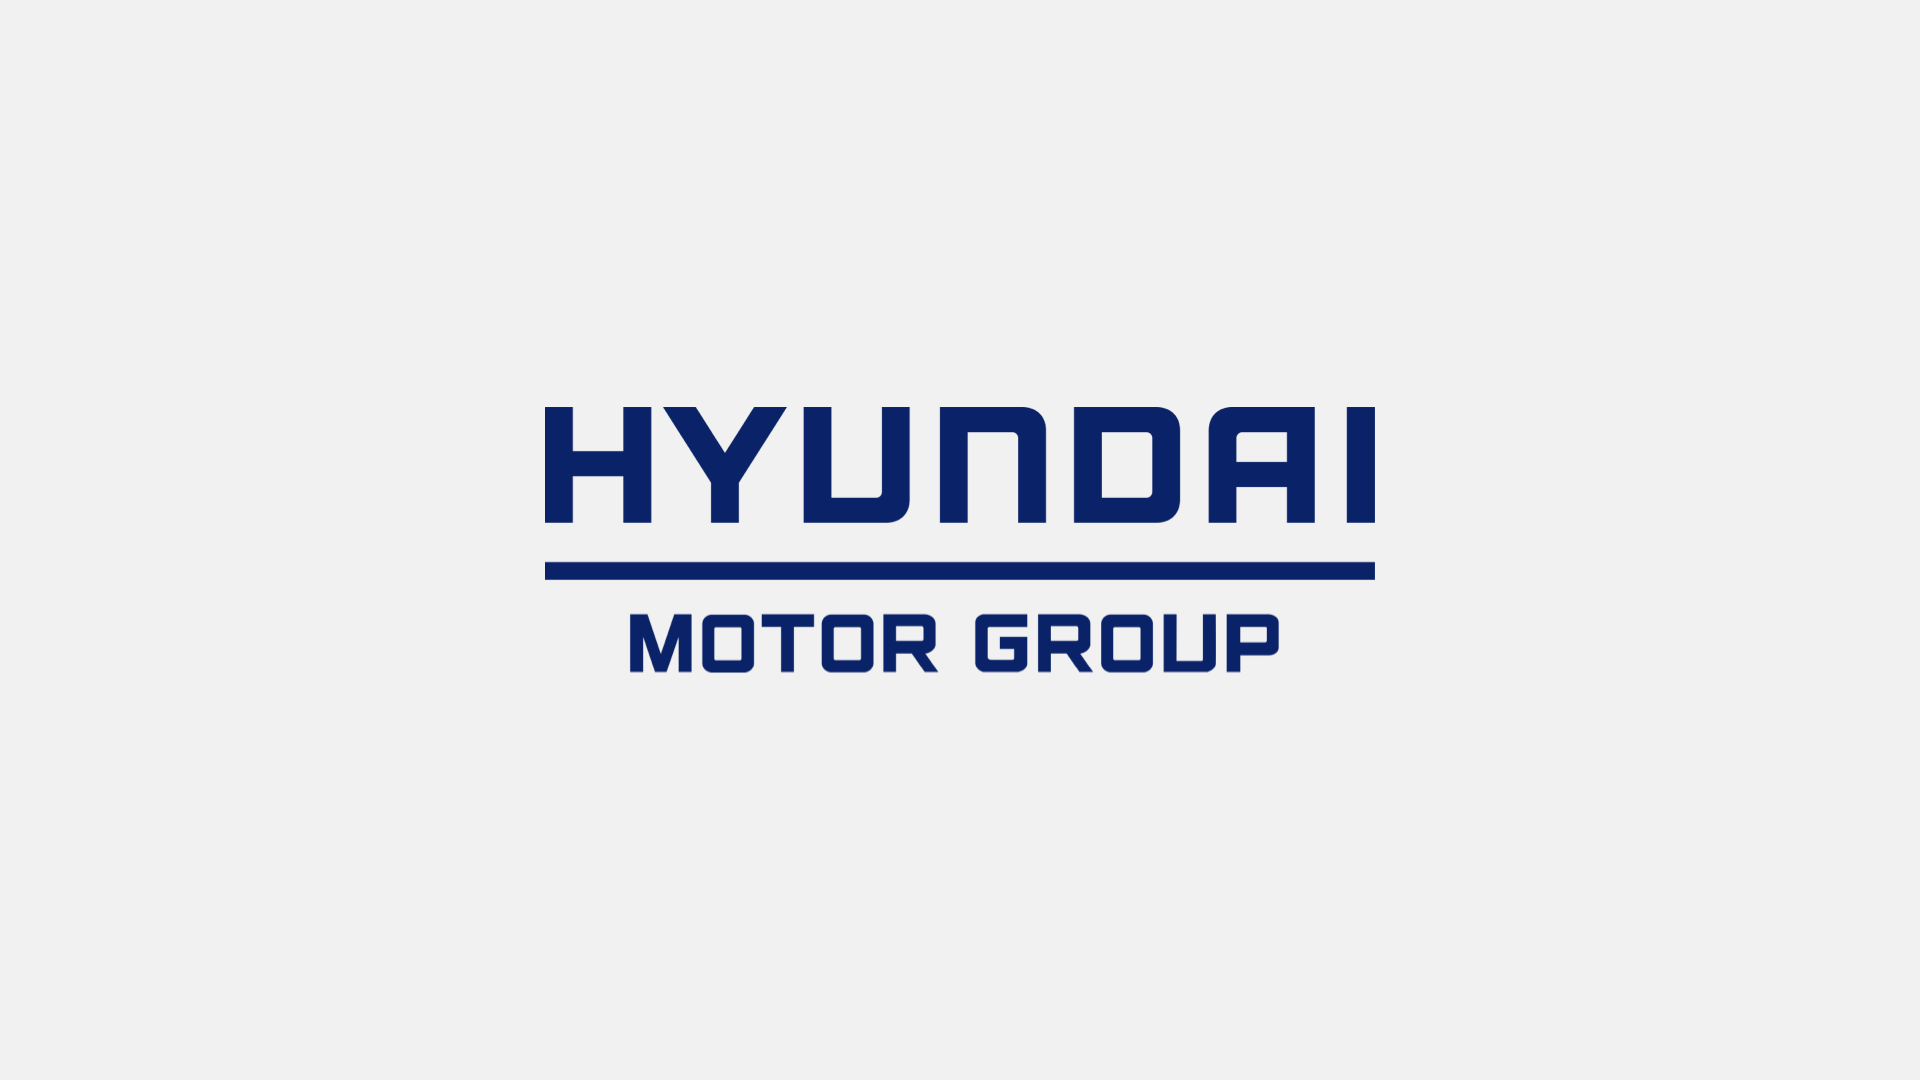 Hyundai Motor Group logo